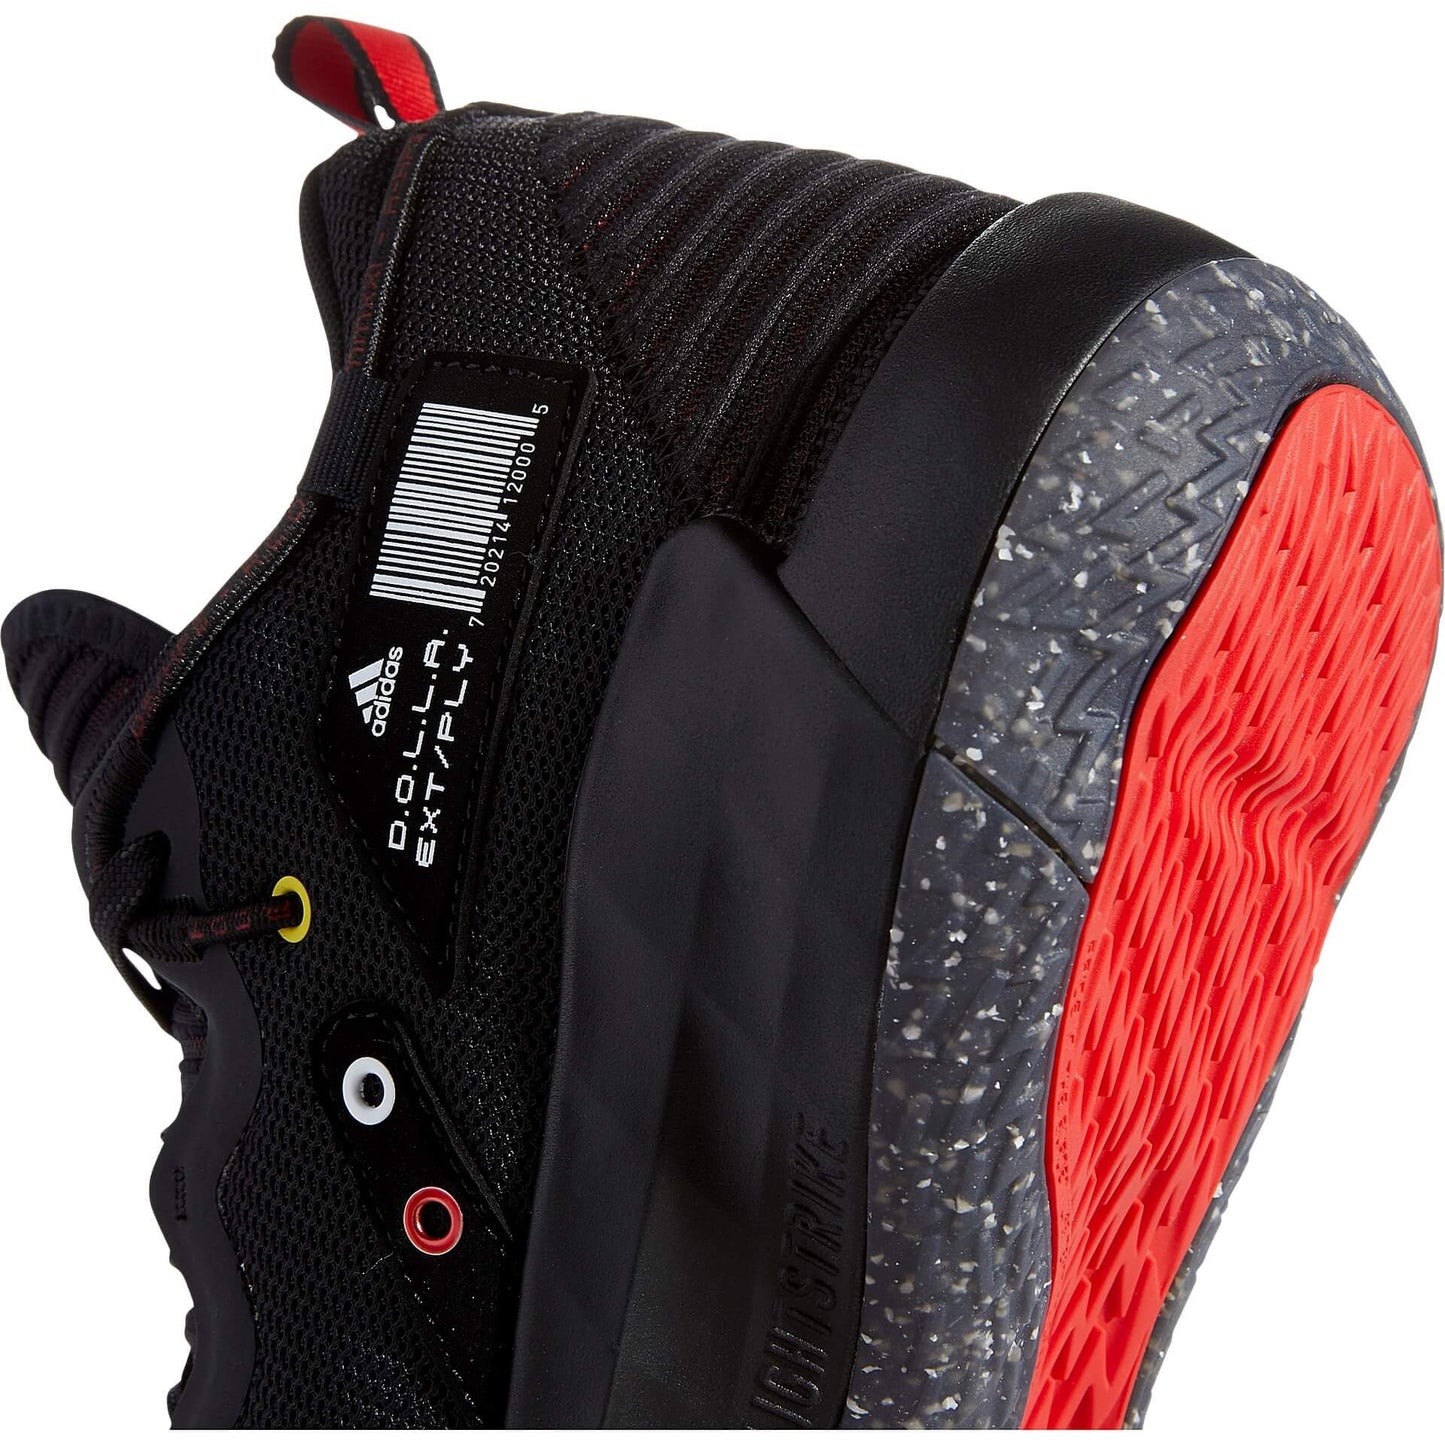 Adidas Dame 7 EXTPLY: Opponent Advisory Shoes Core Black